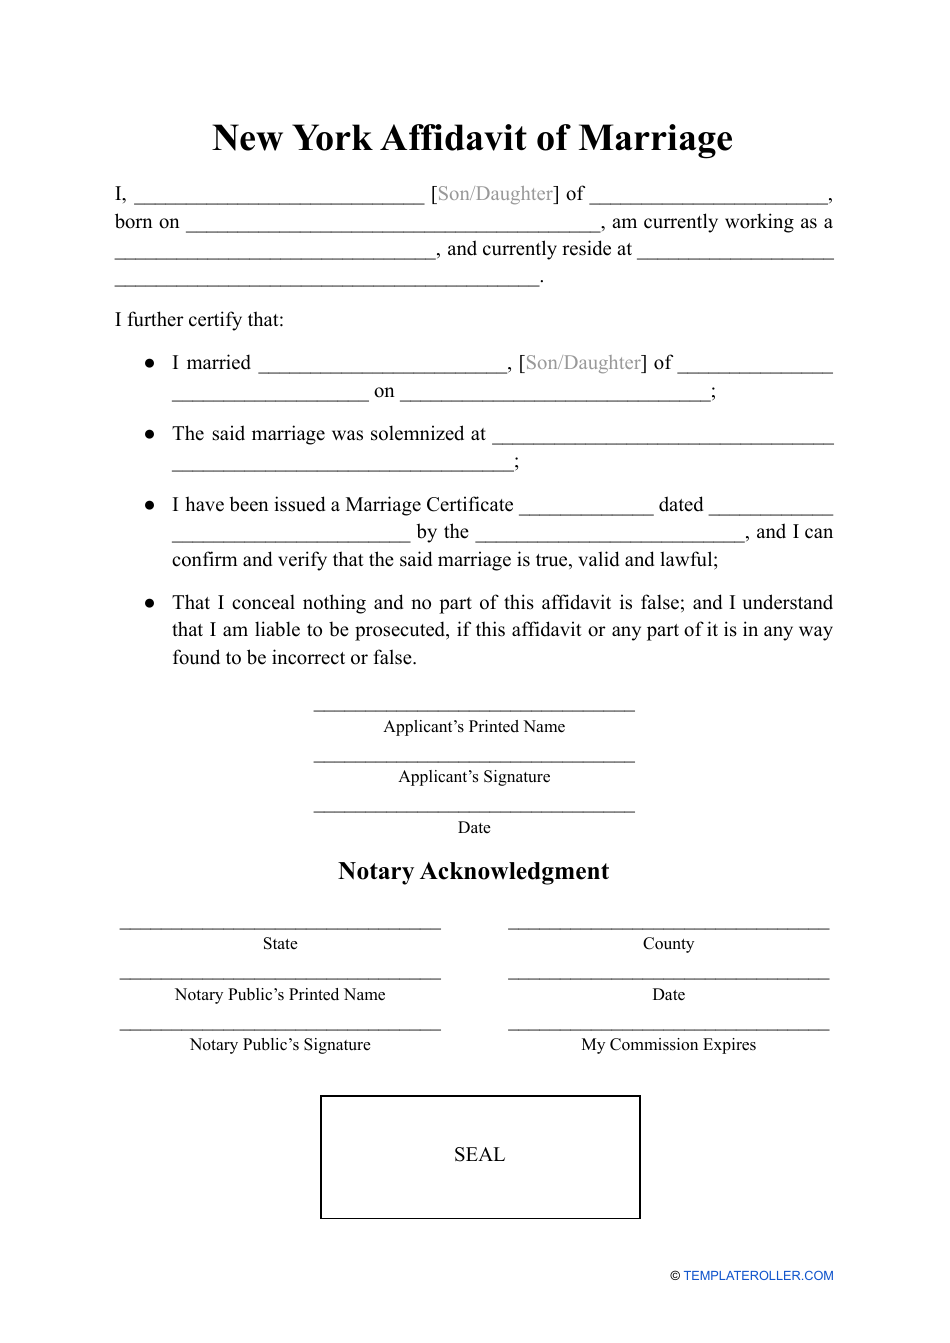 Affidavit of Marriage - New York, Page 1